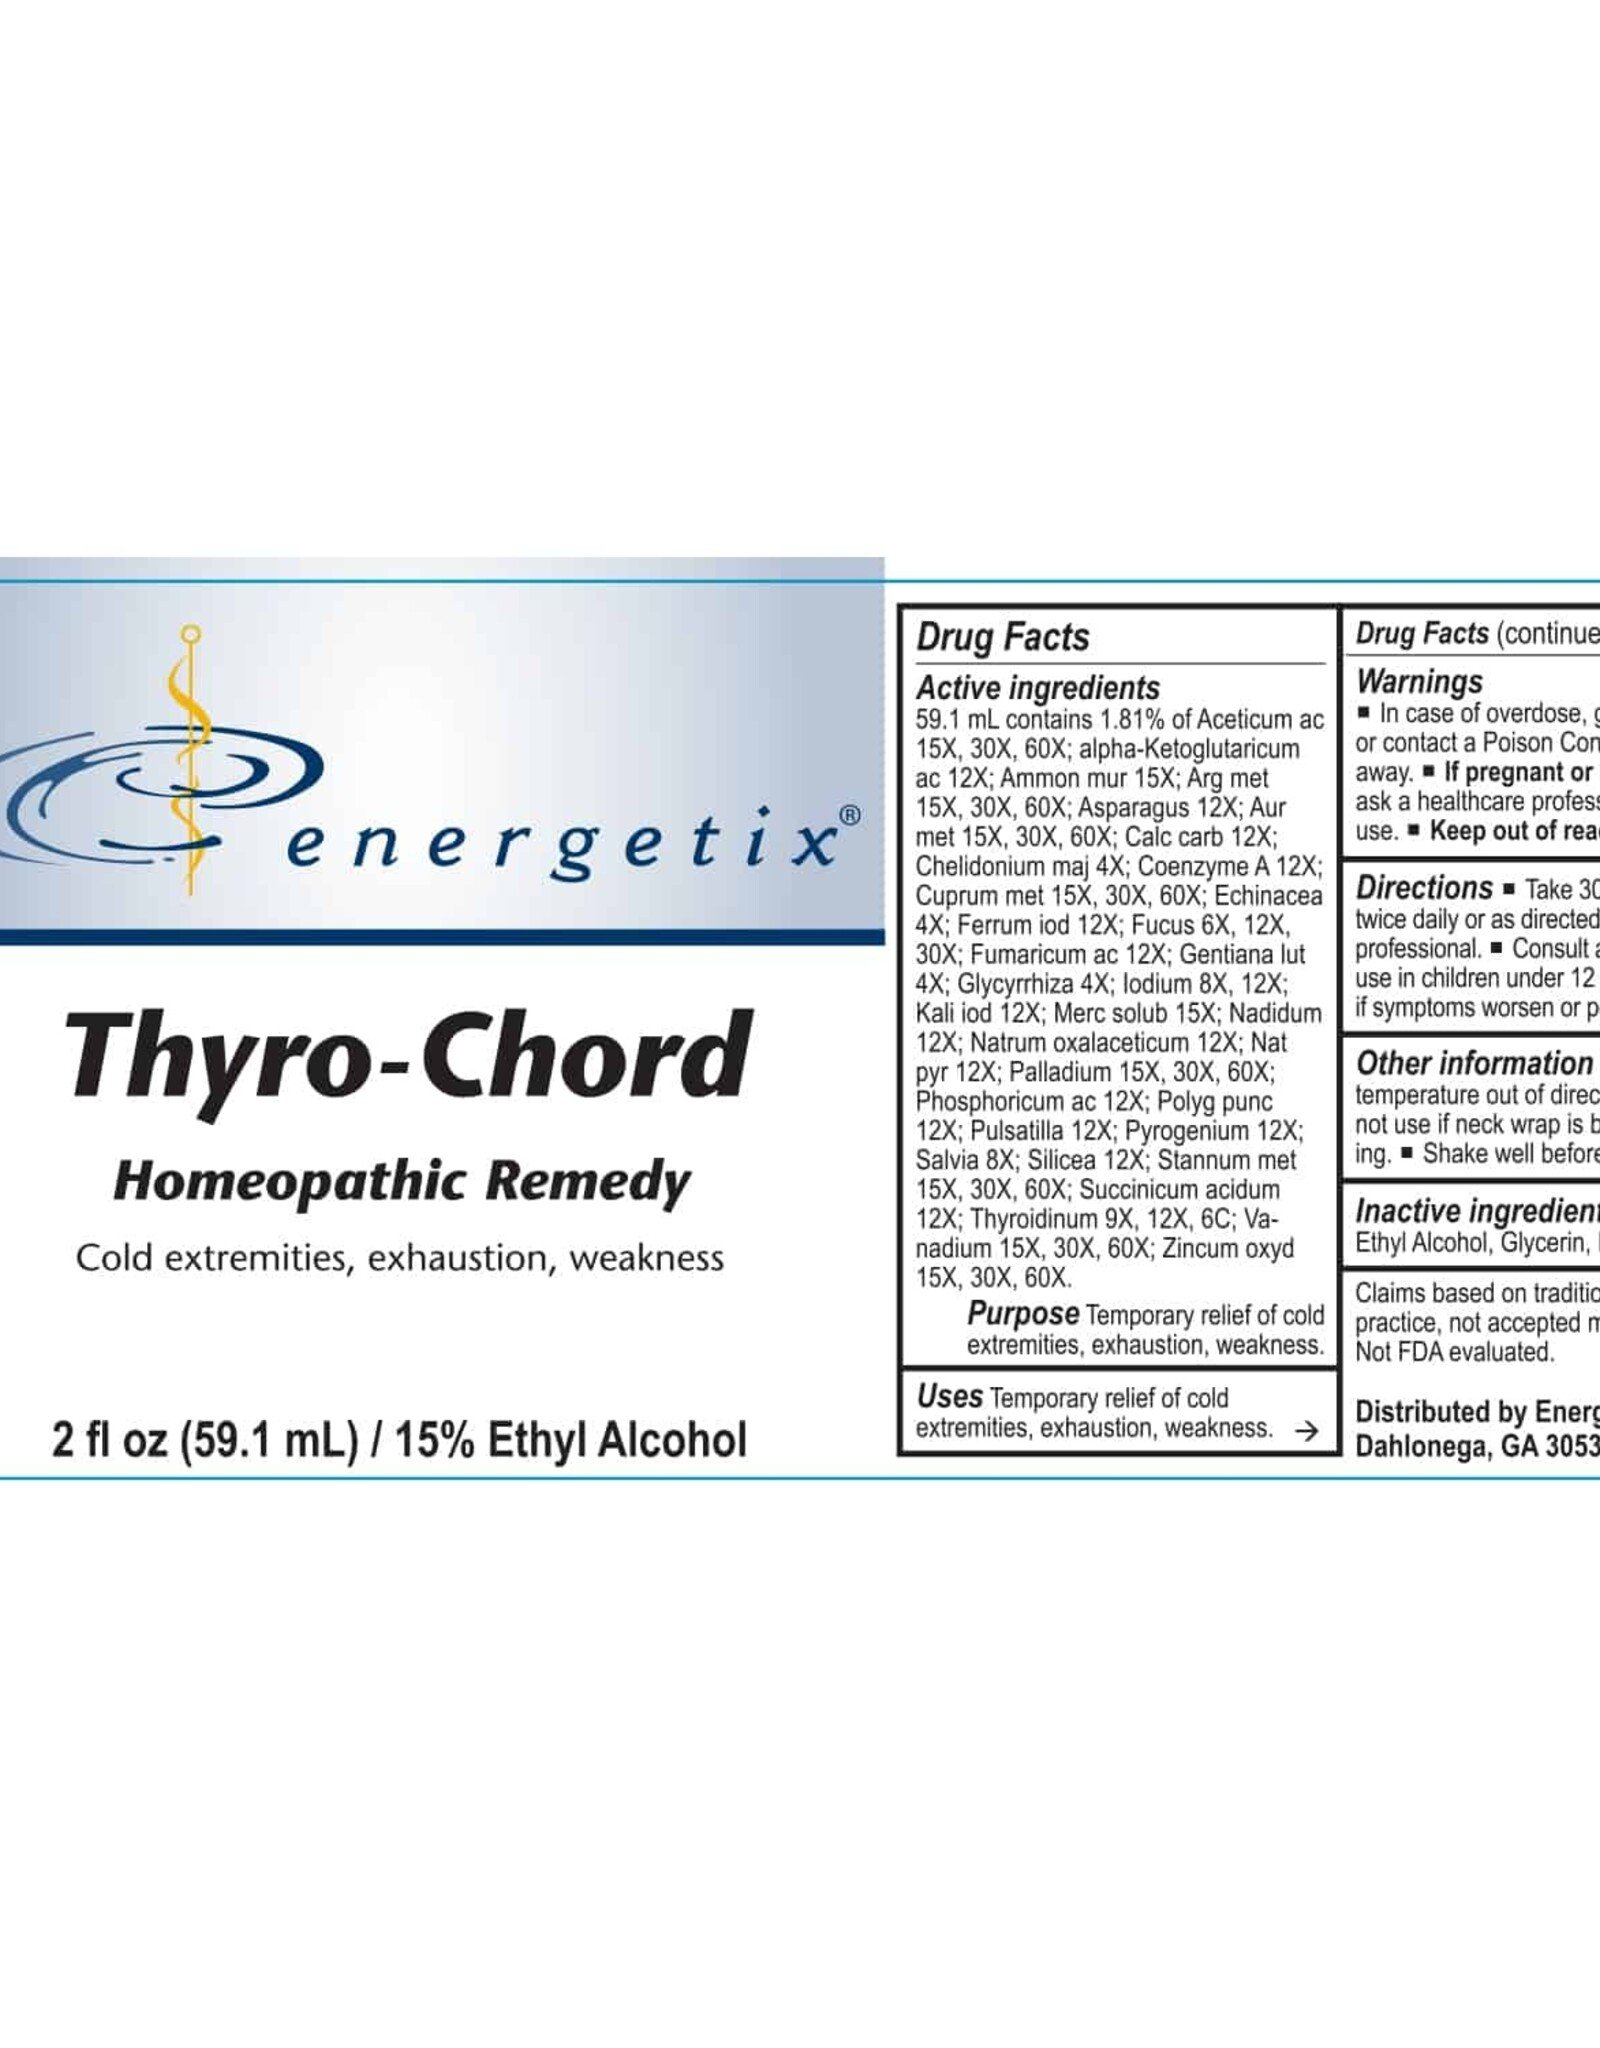 Energetix Thyro-Chord